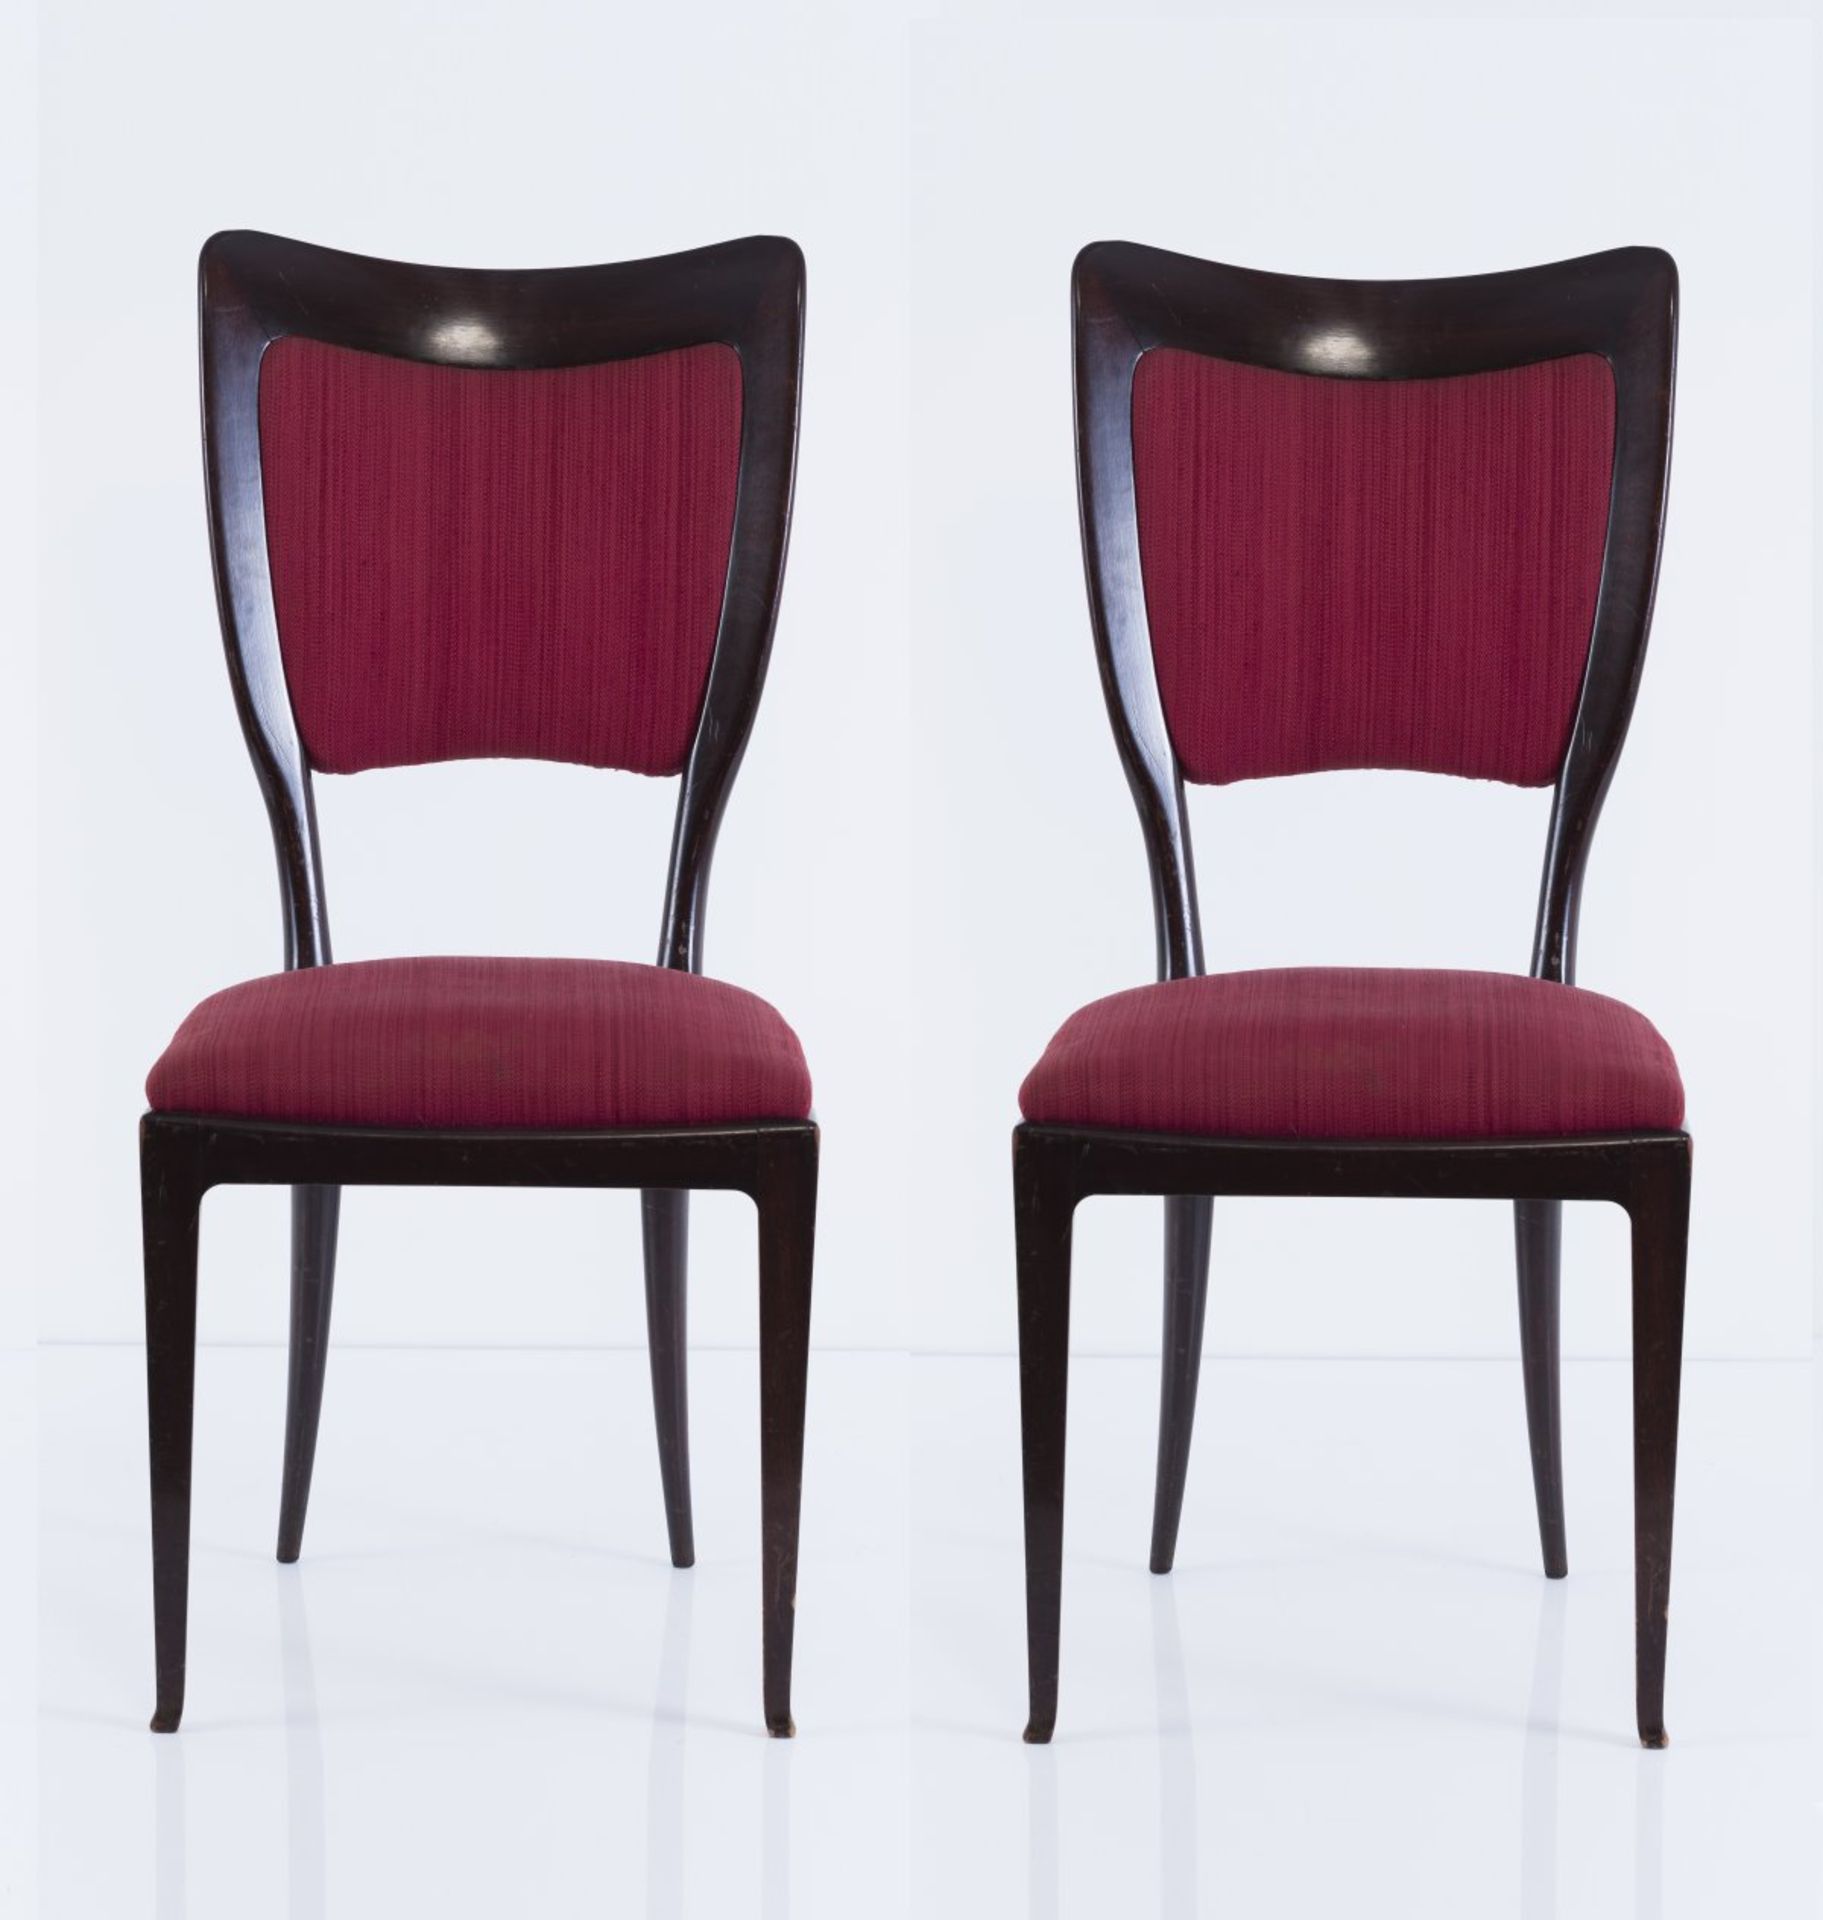 Paolo Buffa, Zwei Stühle, um 1949 - Image 2 of 5